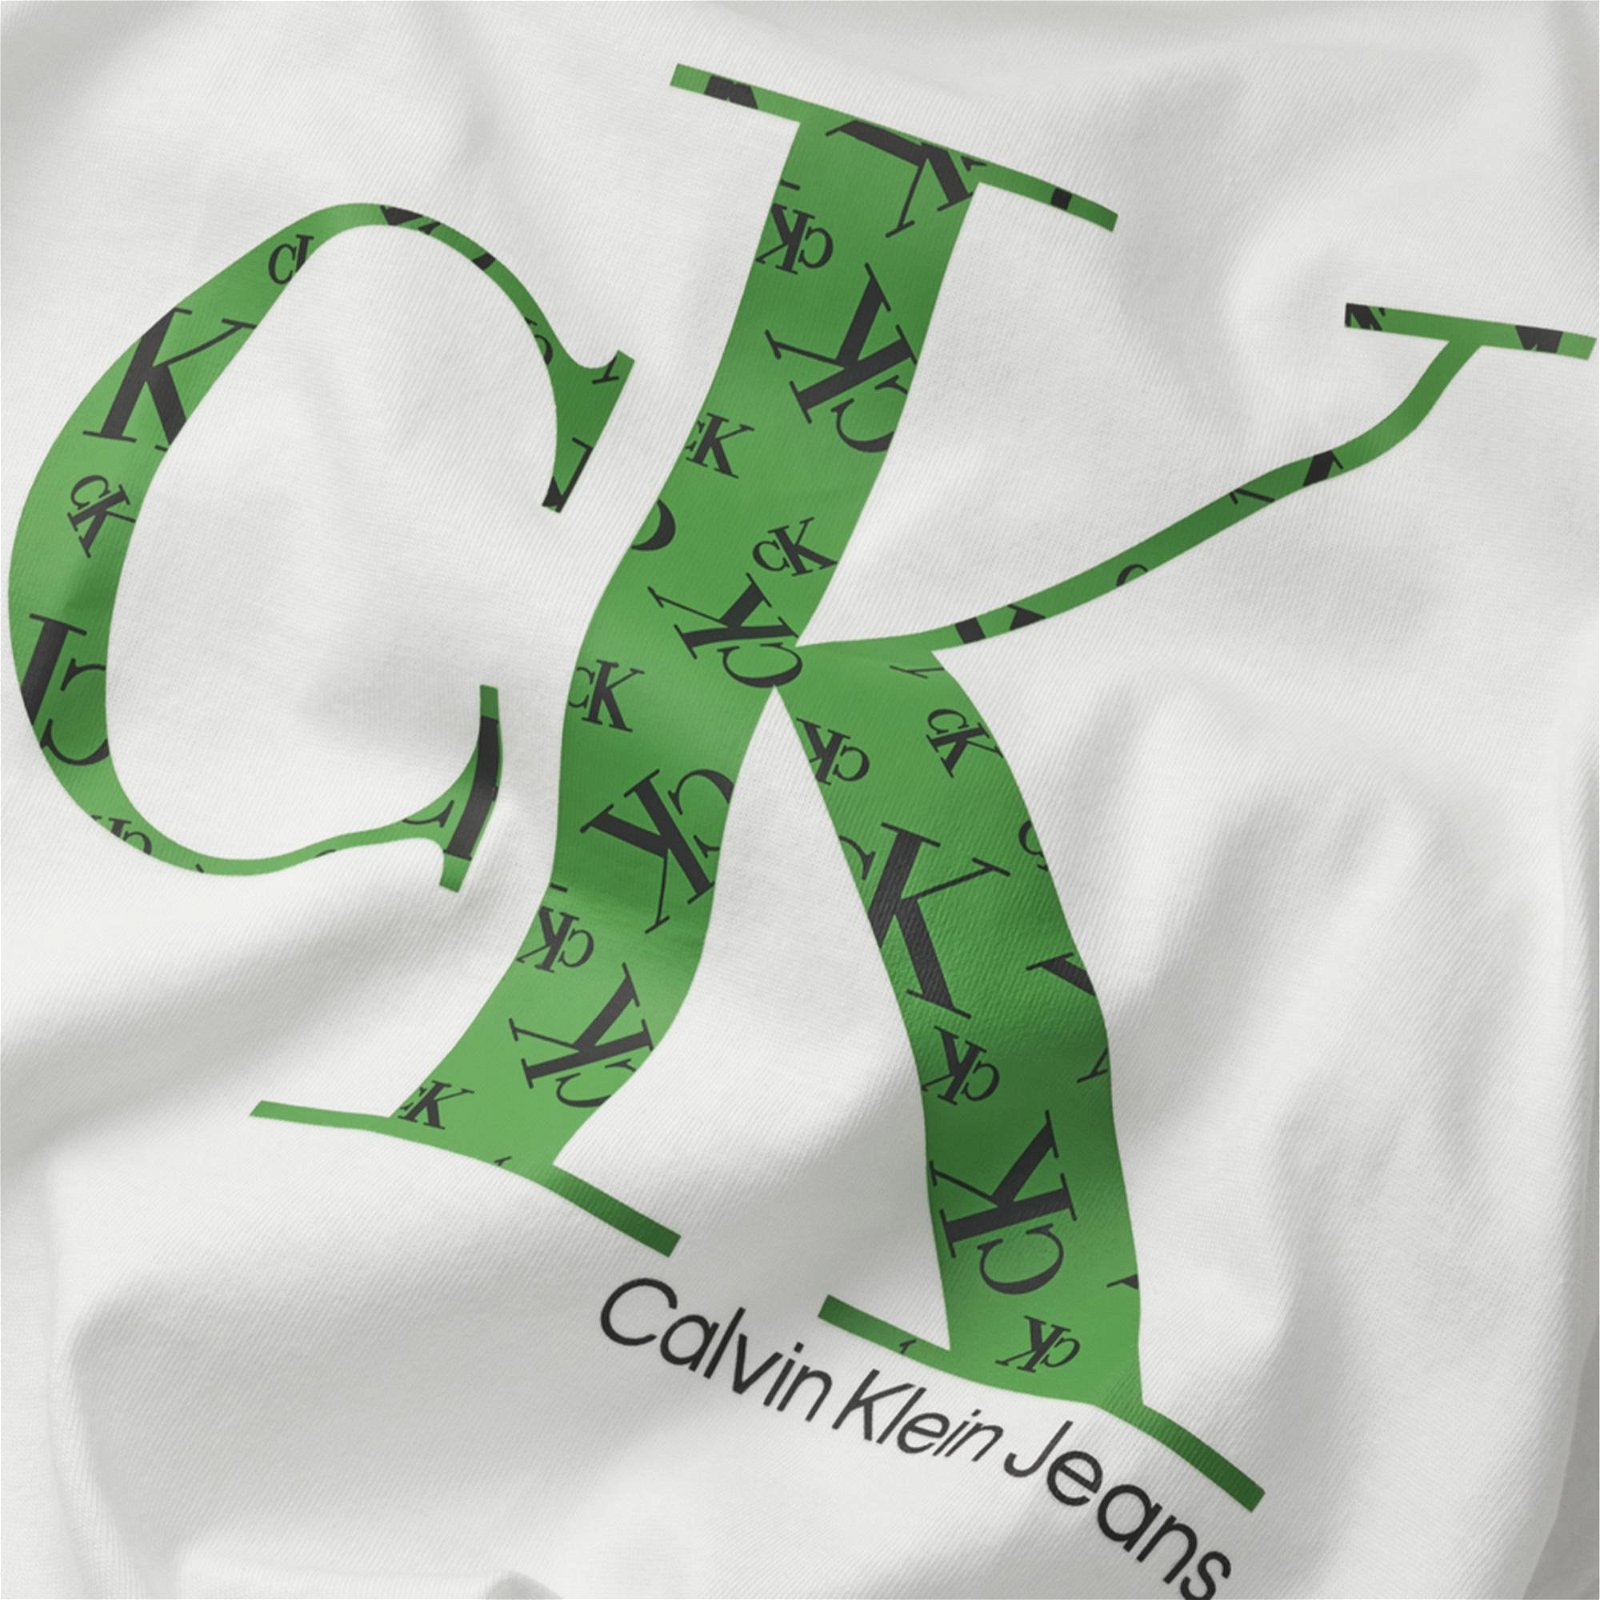 Calvin Klein Grid Monogram Logo Çocuk Beyaz T-Shirt